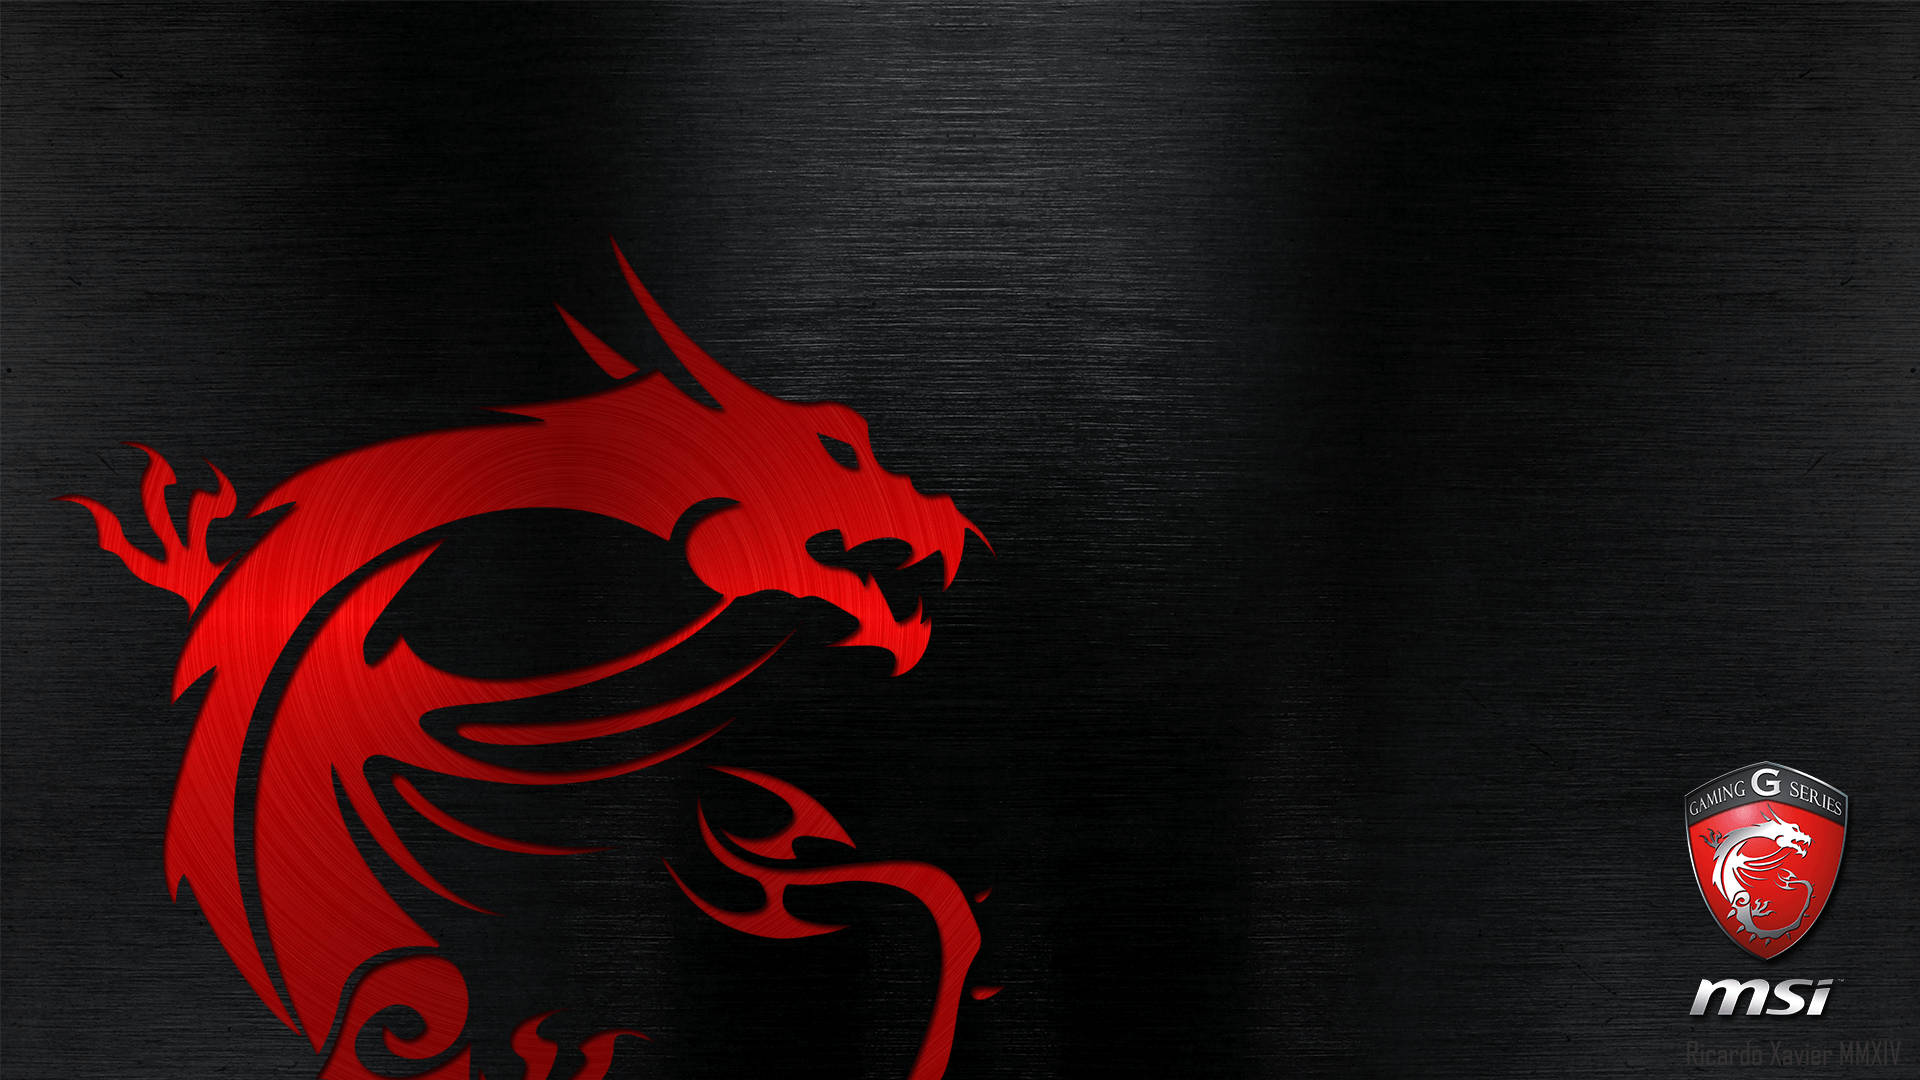 Red Msi Dragon G Series Logo Background